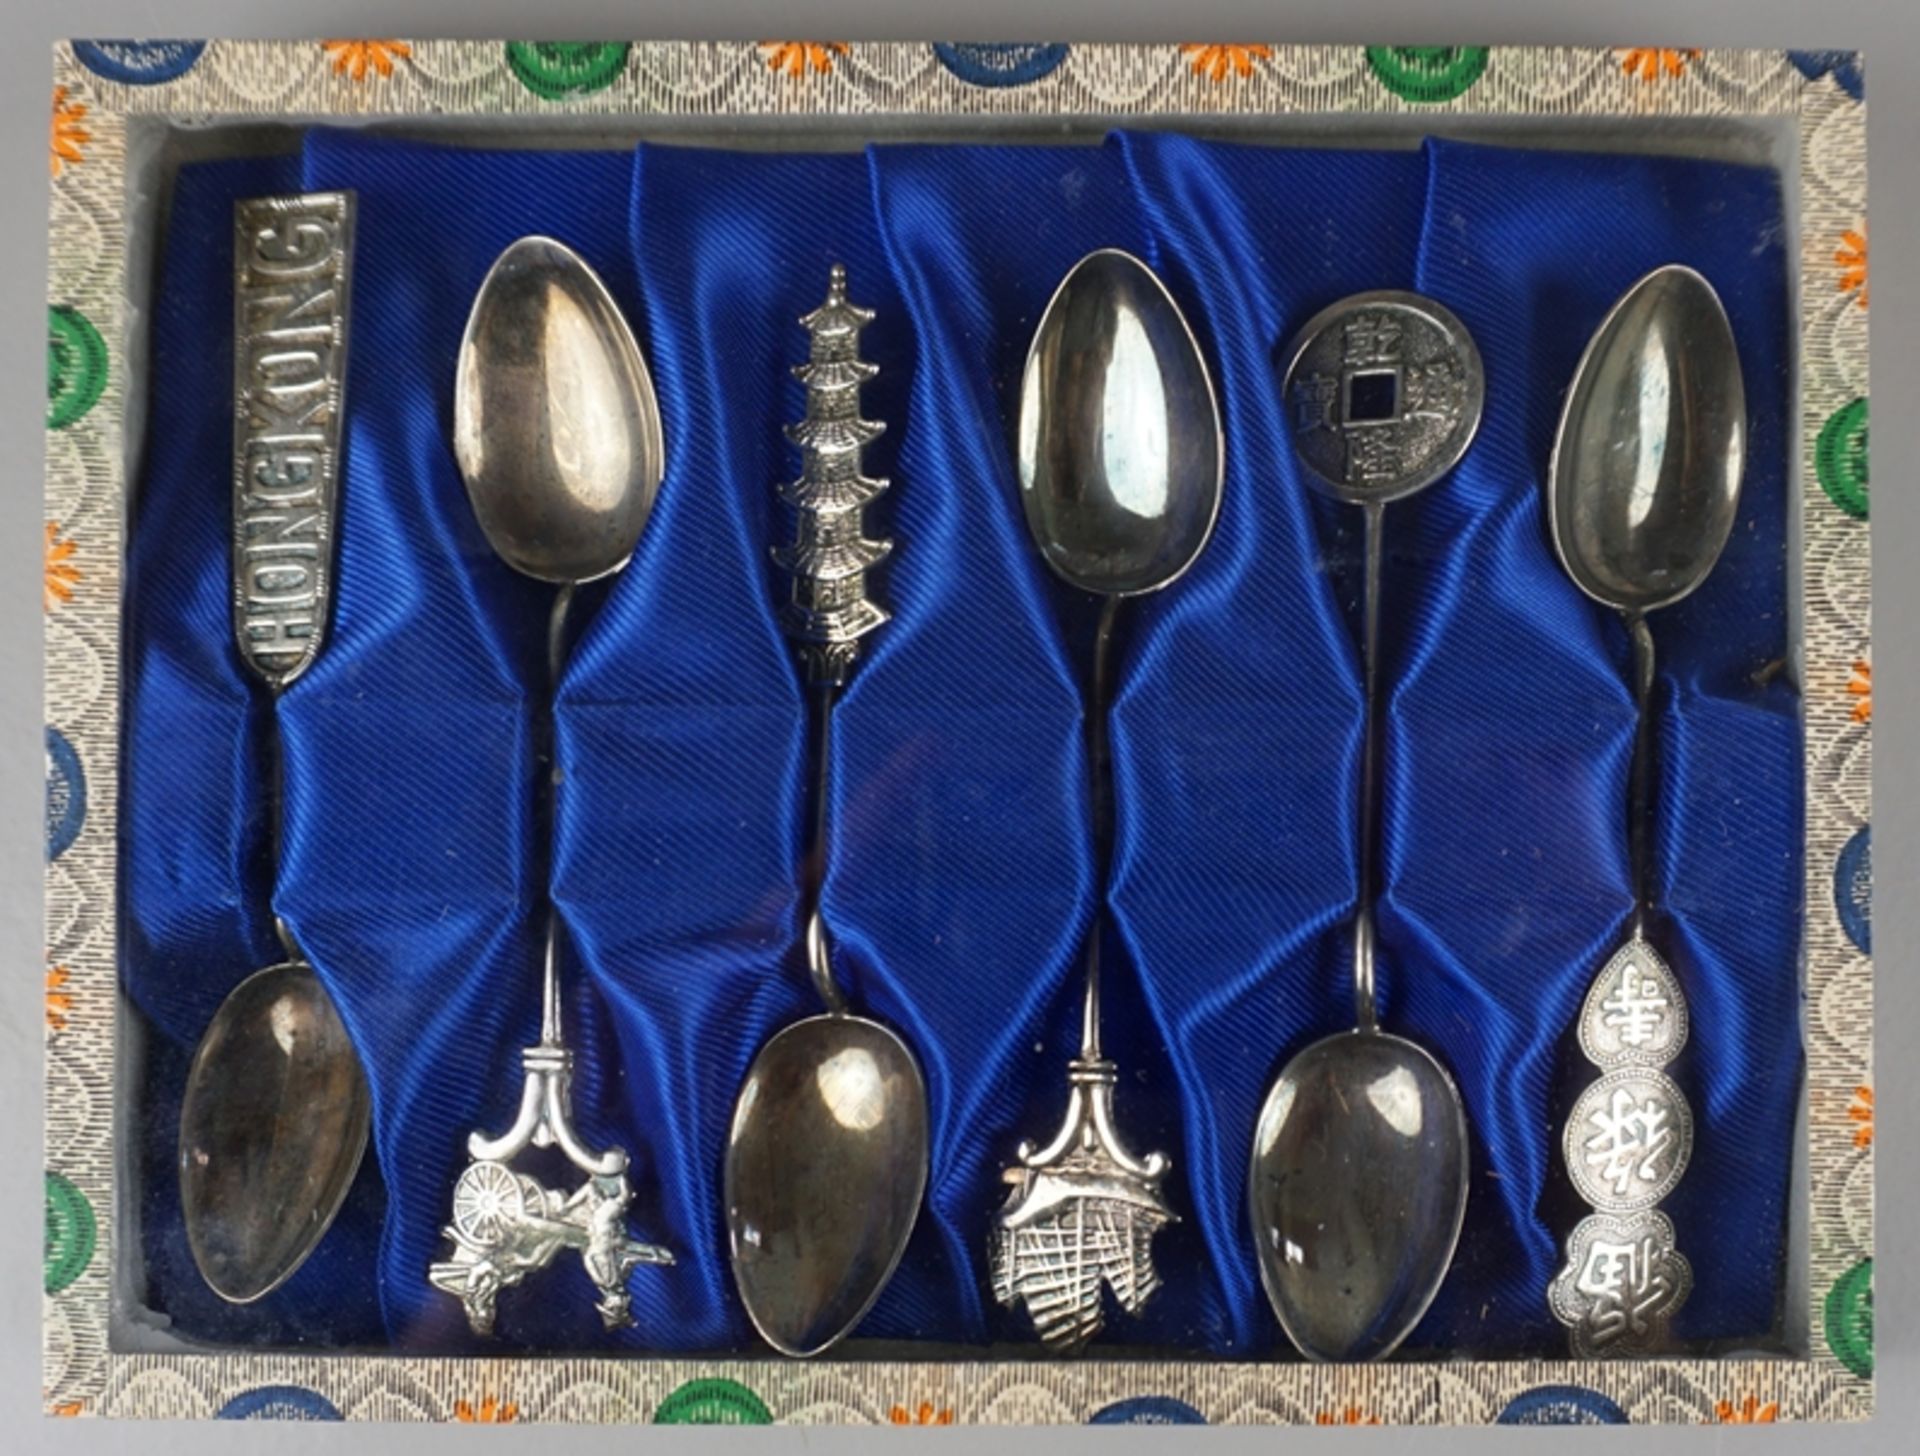 6 souvenir spoons, silver plated, Hong Kong - Image 2 of 2